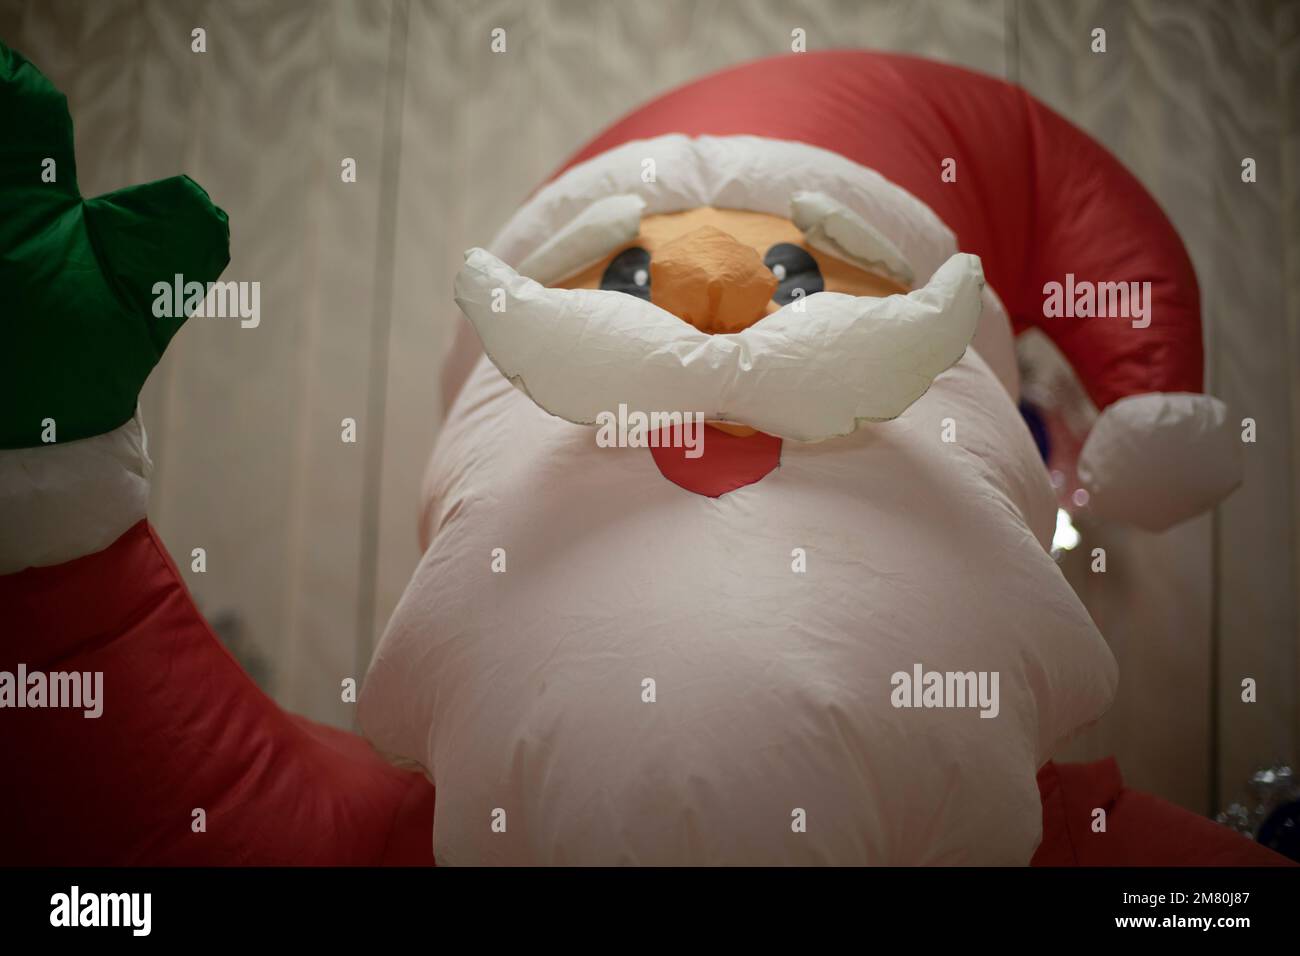 Inflatable Santa Claus. New Year game. Growth doll with air. Santa Claus waving his hand. Stock Photo